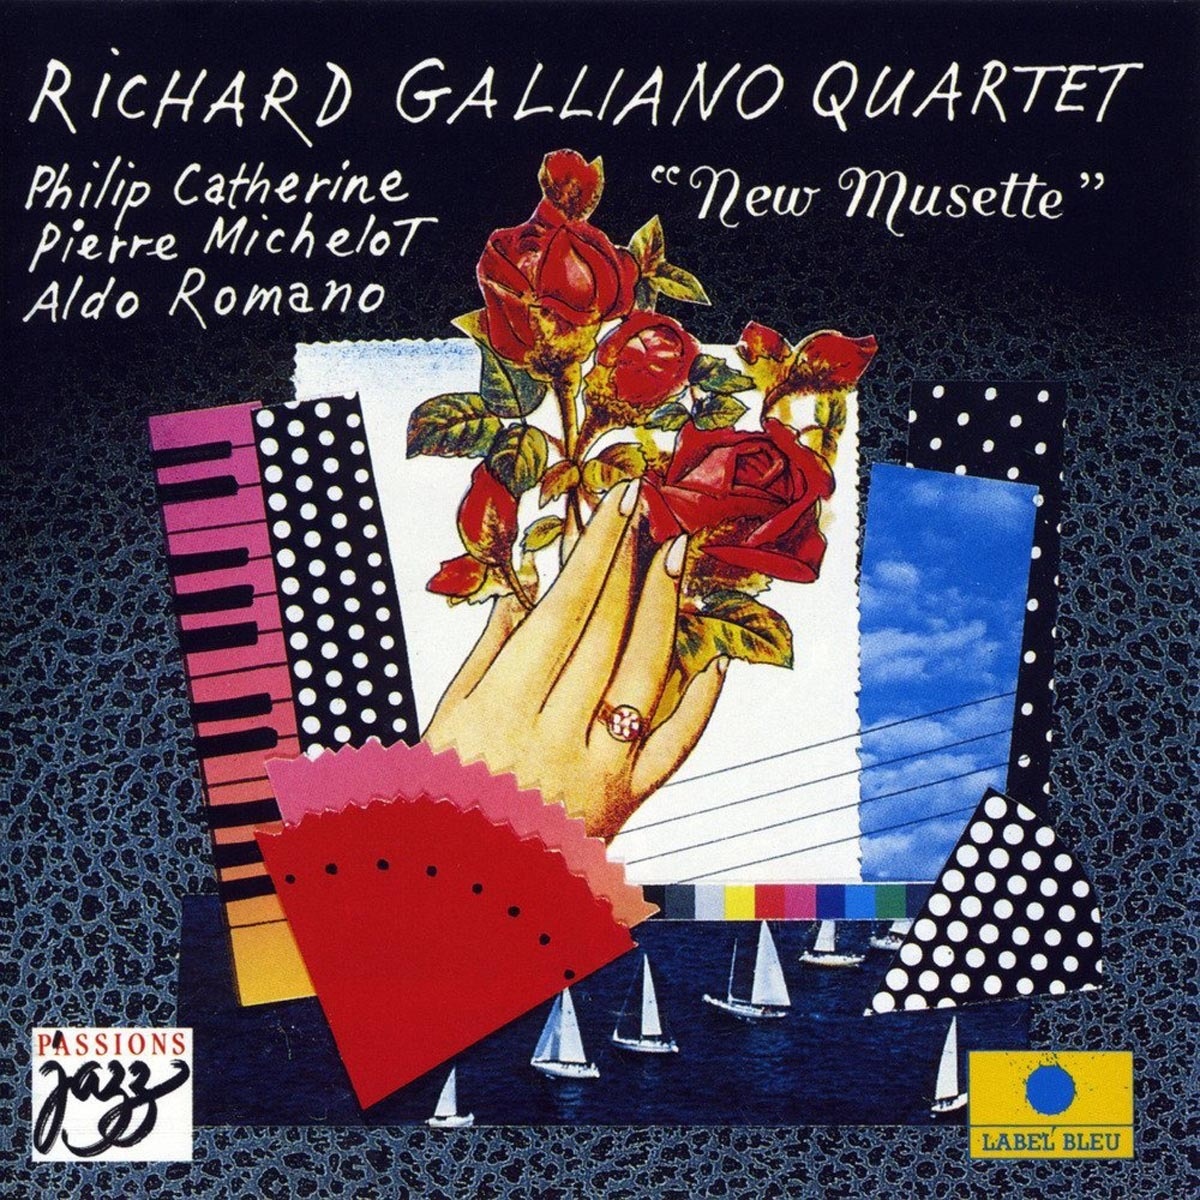 New Musette - Richard Galliano Quartet. (CD)